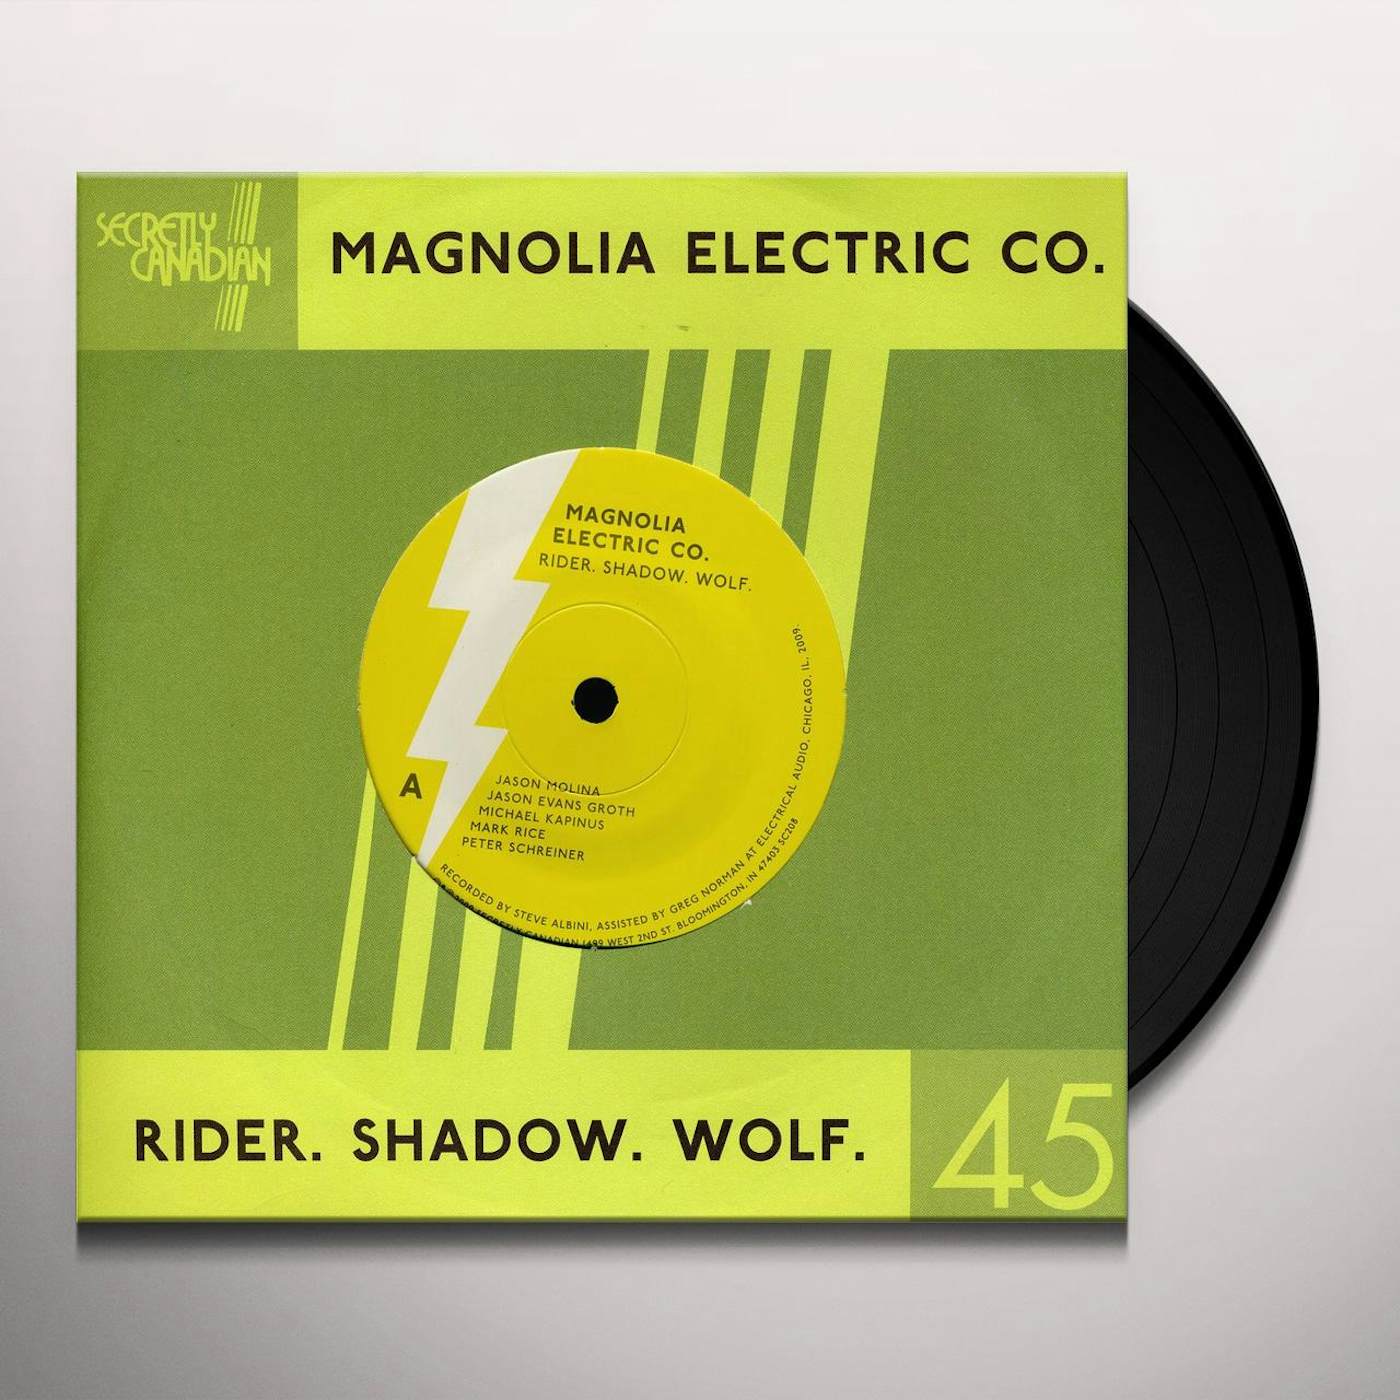 Magnolia Electric Co. RIDER SHADOW WOLF Vinyl Record